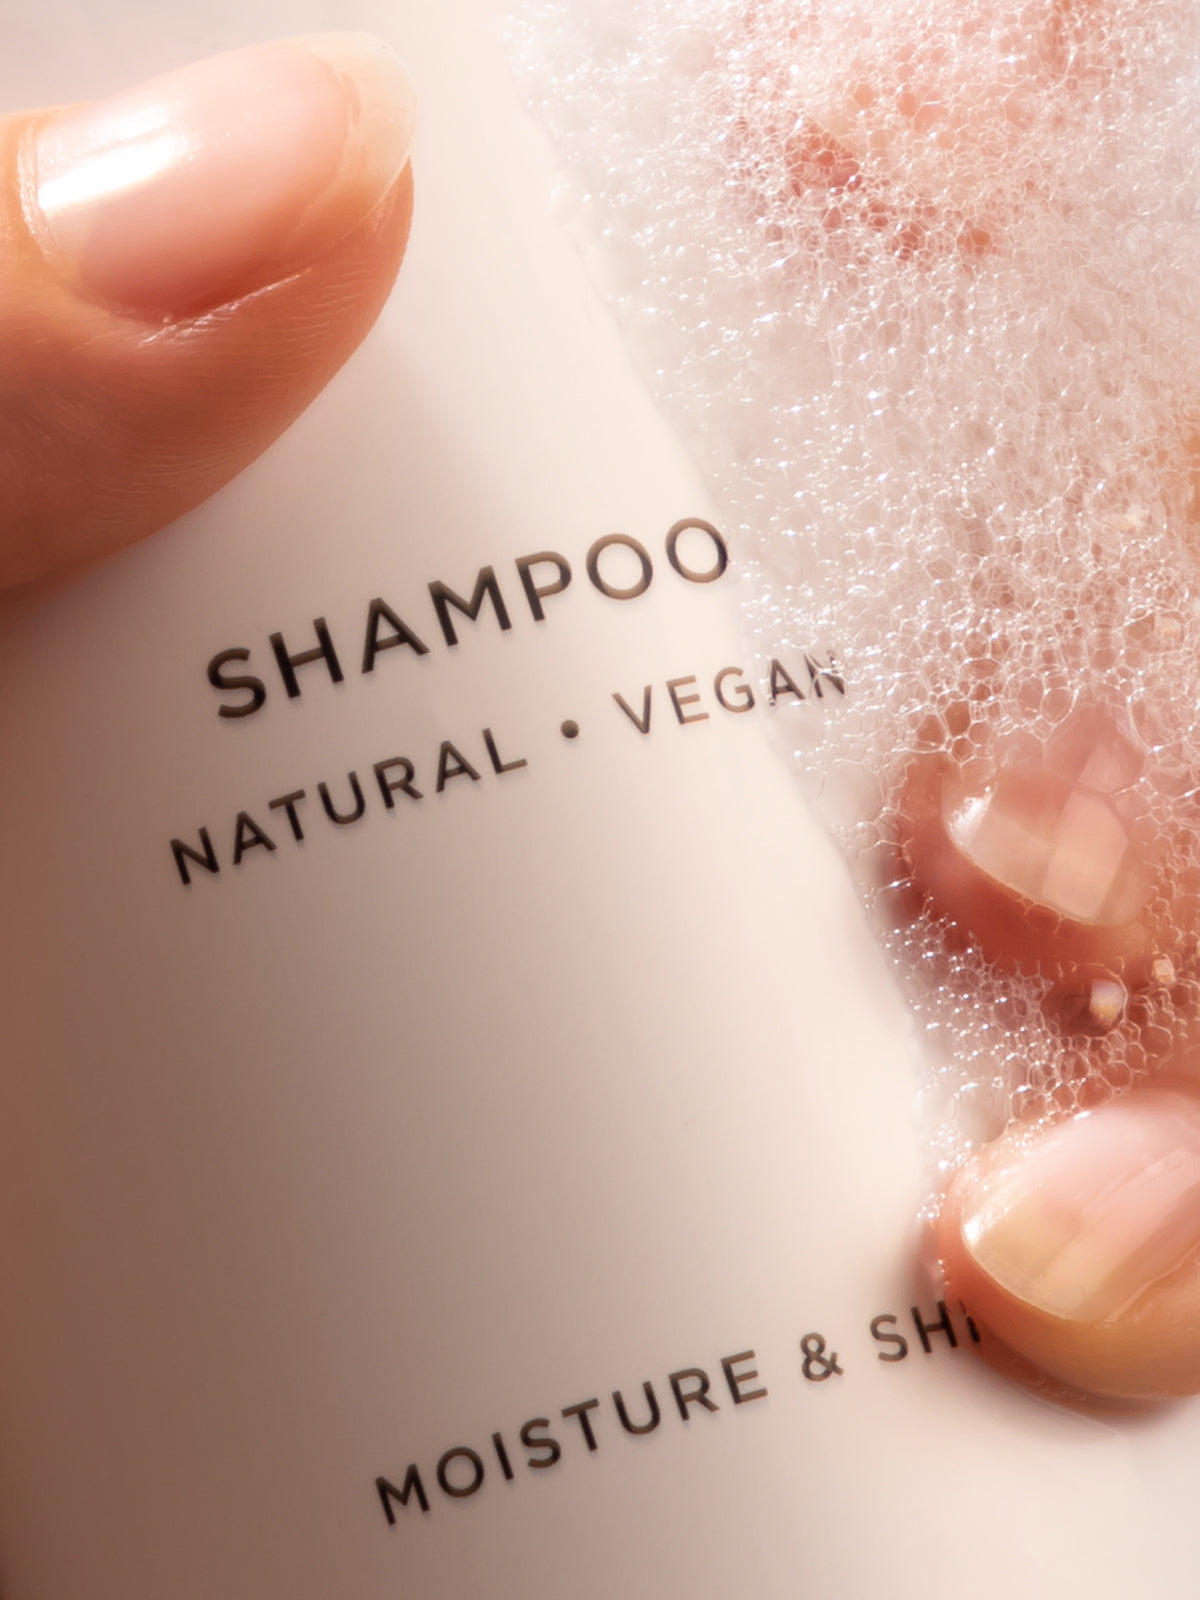 NUI Shampoo Natural & vegan